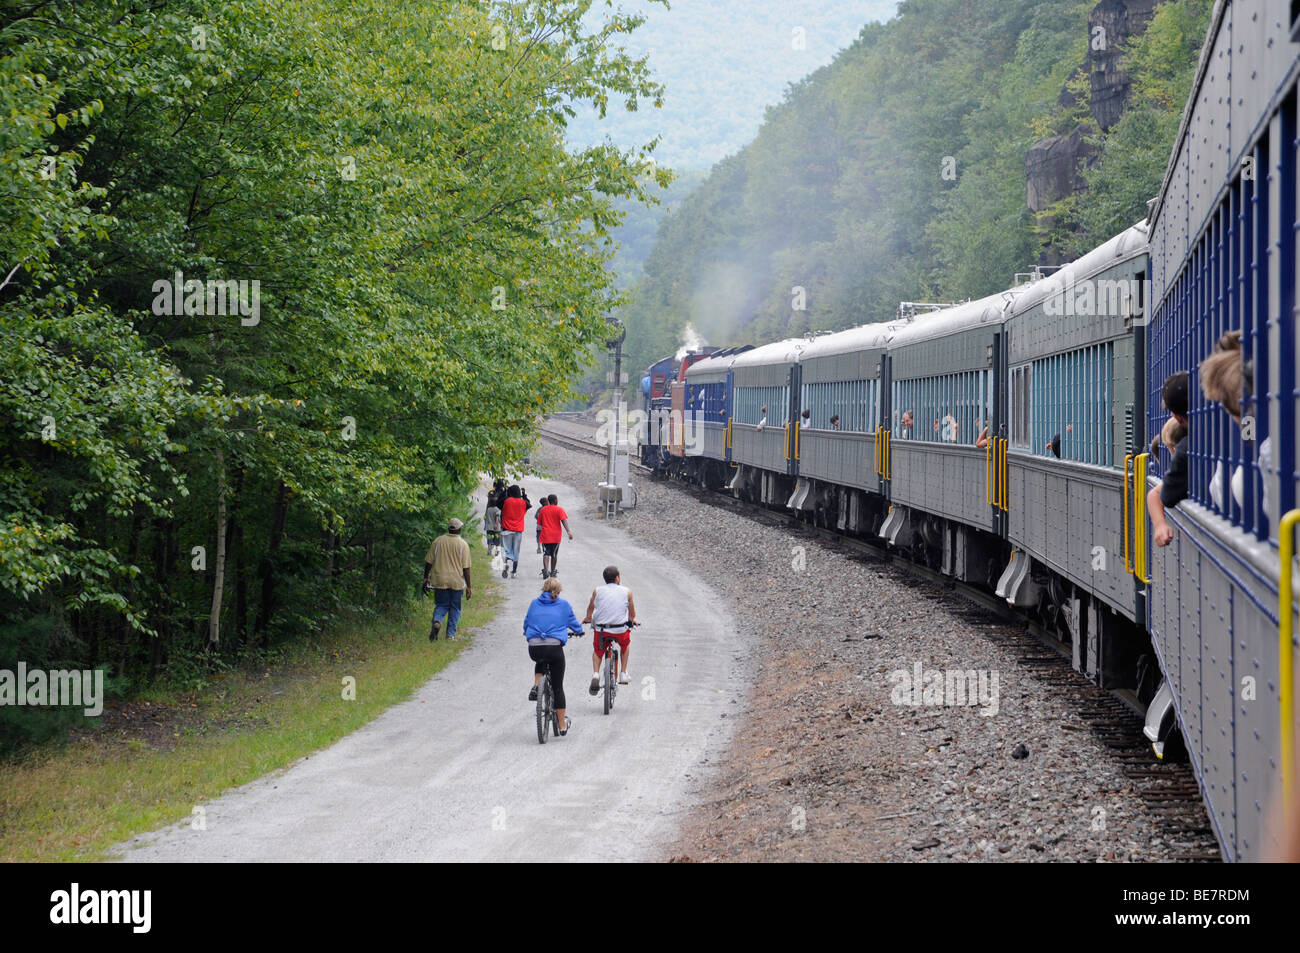 Where can you get a train ride in Jim Thorpe, Pennsylvania?